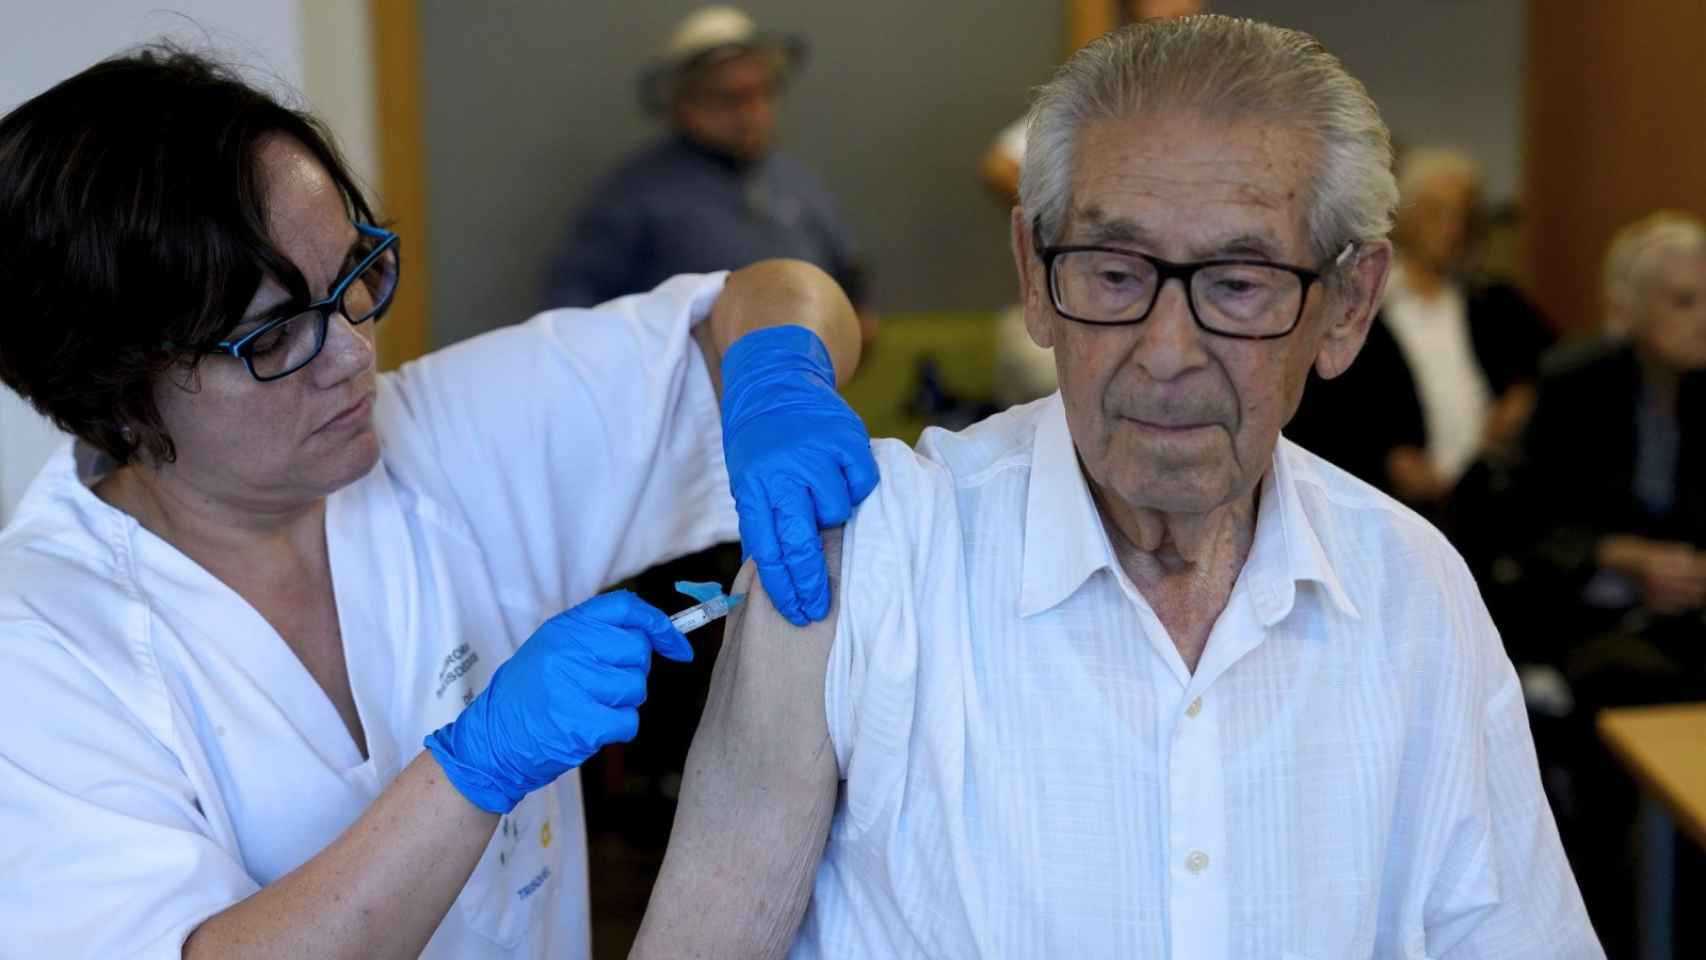 Un hombre recibe la vacuna de la gripe.